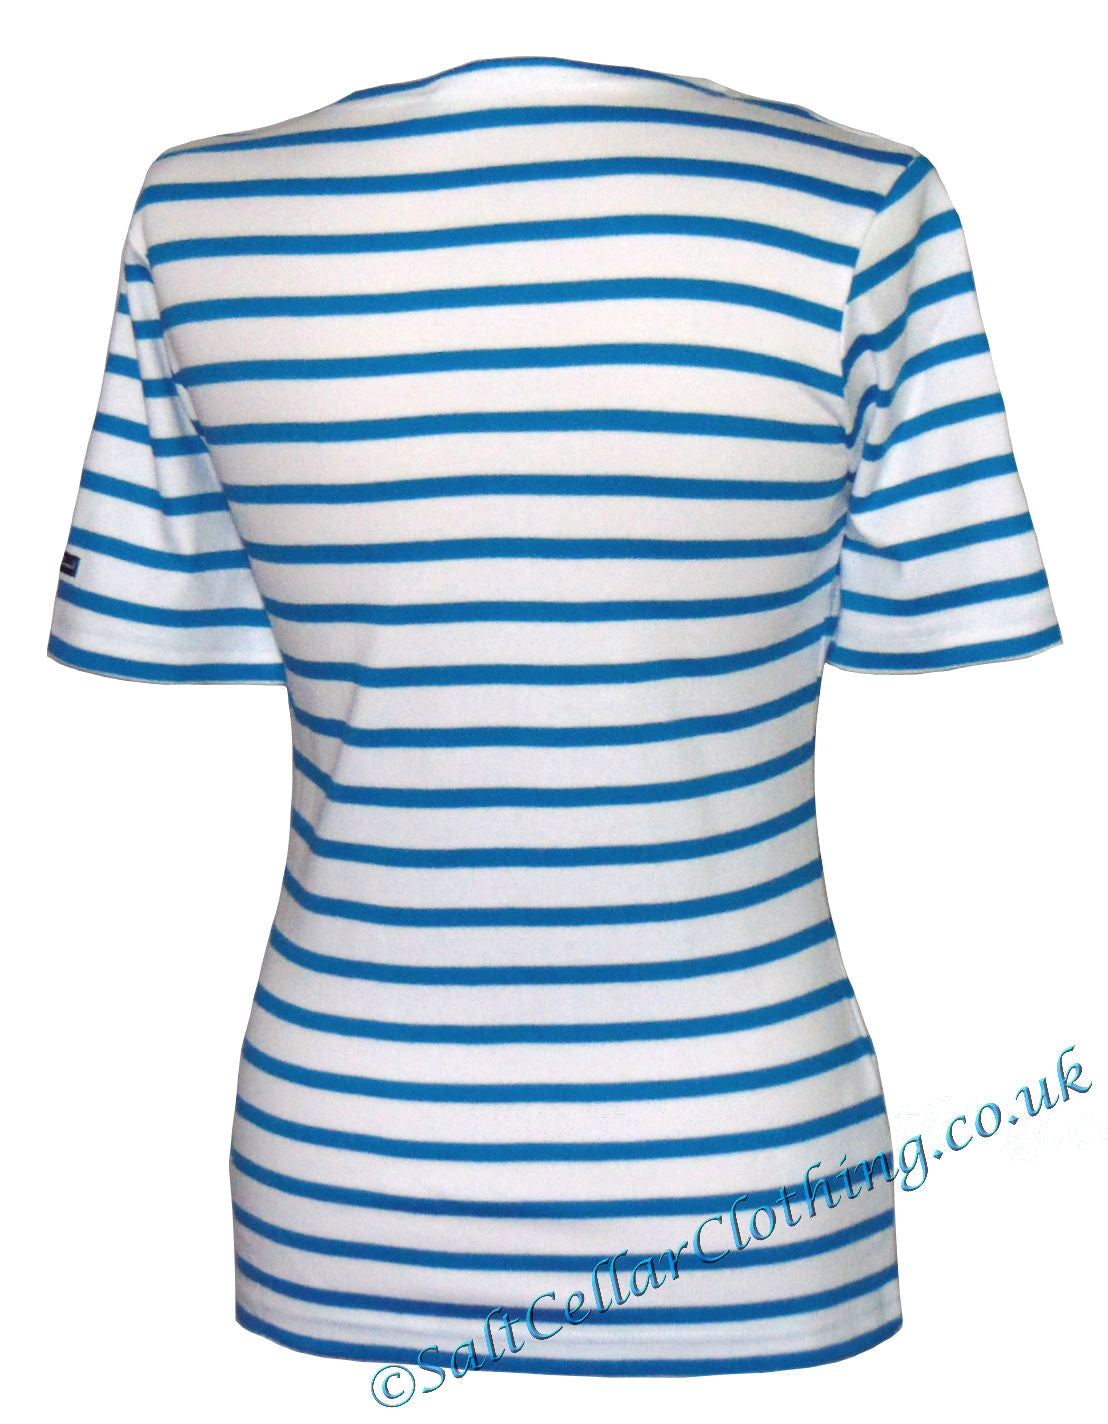 Captain Corsaire Womens 'Fregate MC' Striped Breton Tee - White / Azulli Blue